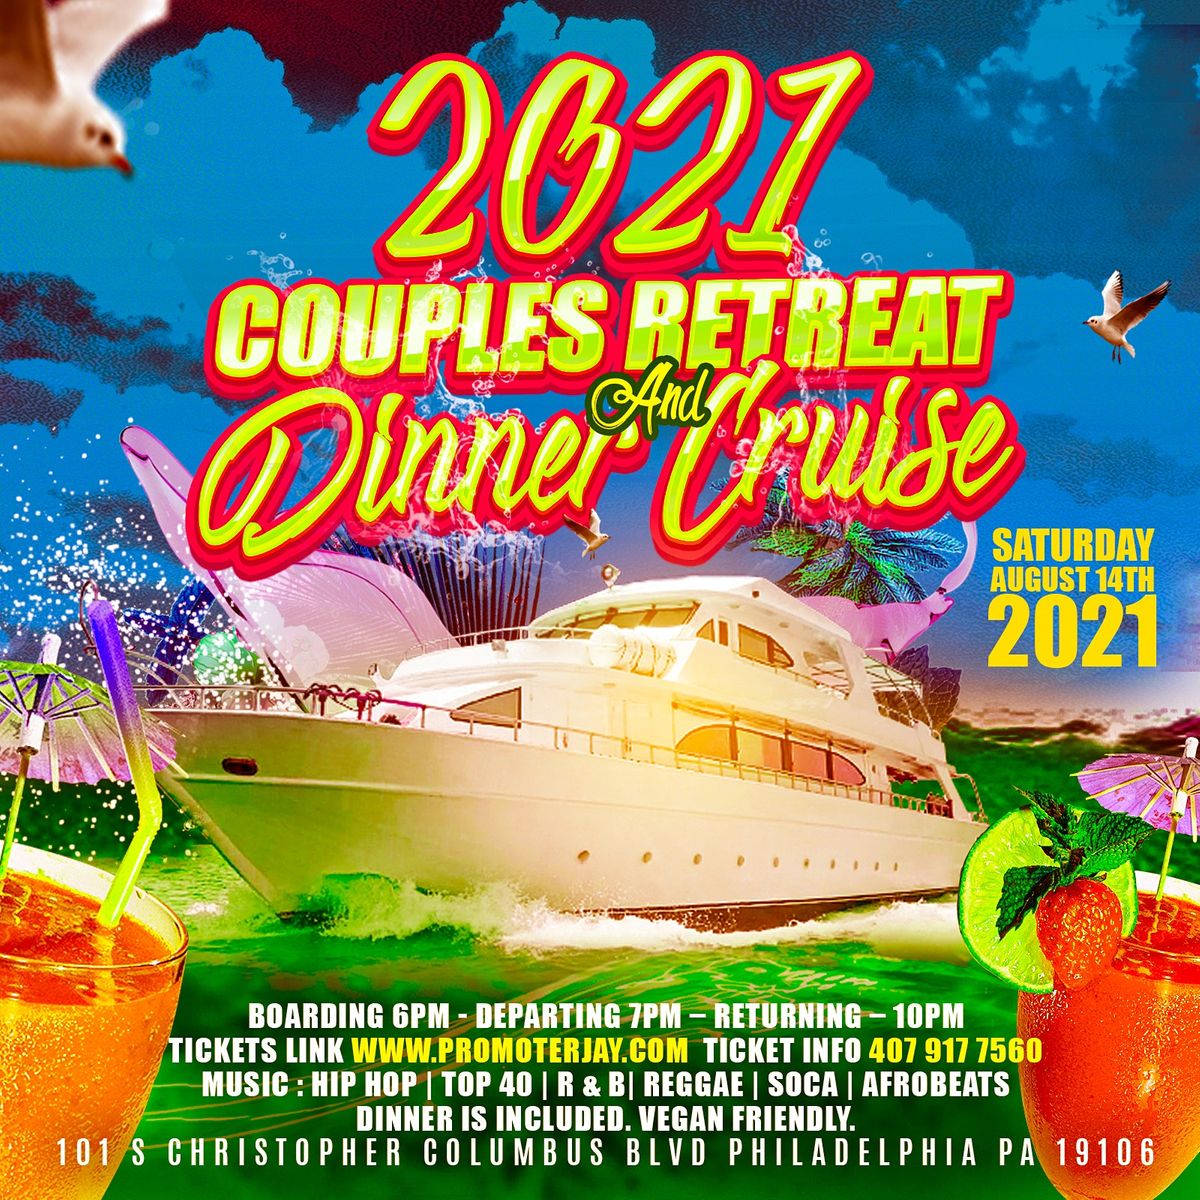 2021 Couples Retreat & Dinner Cruise